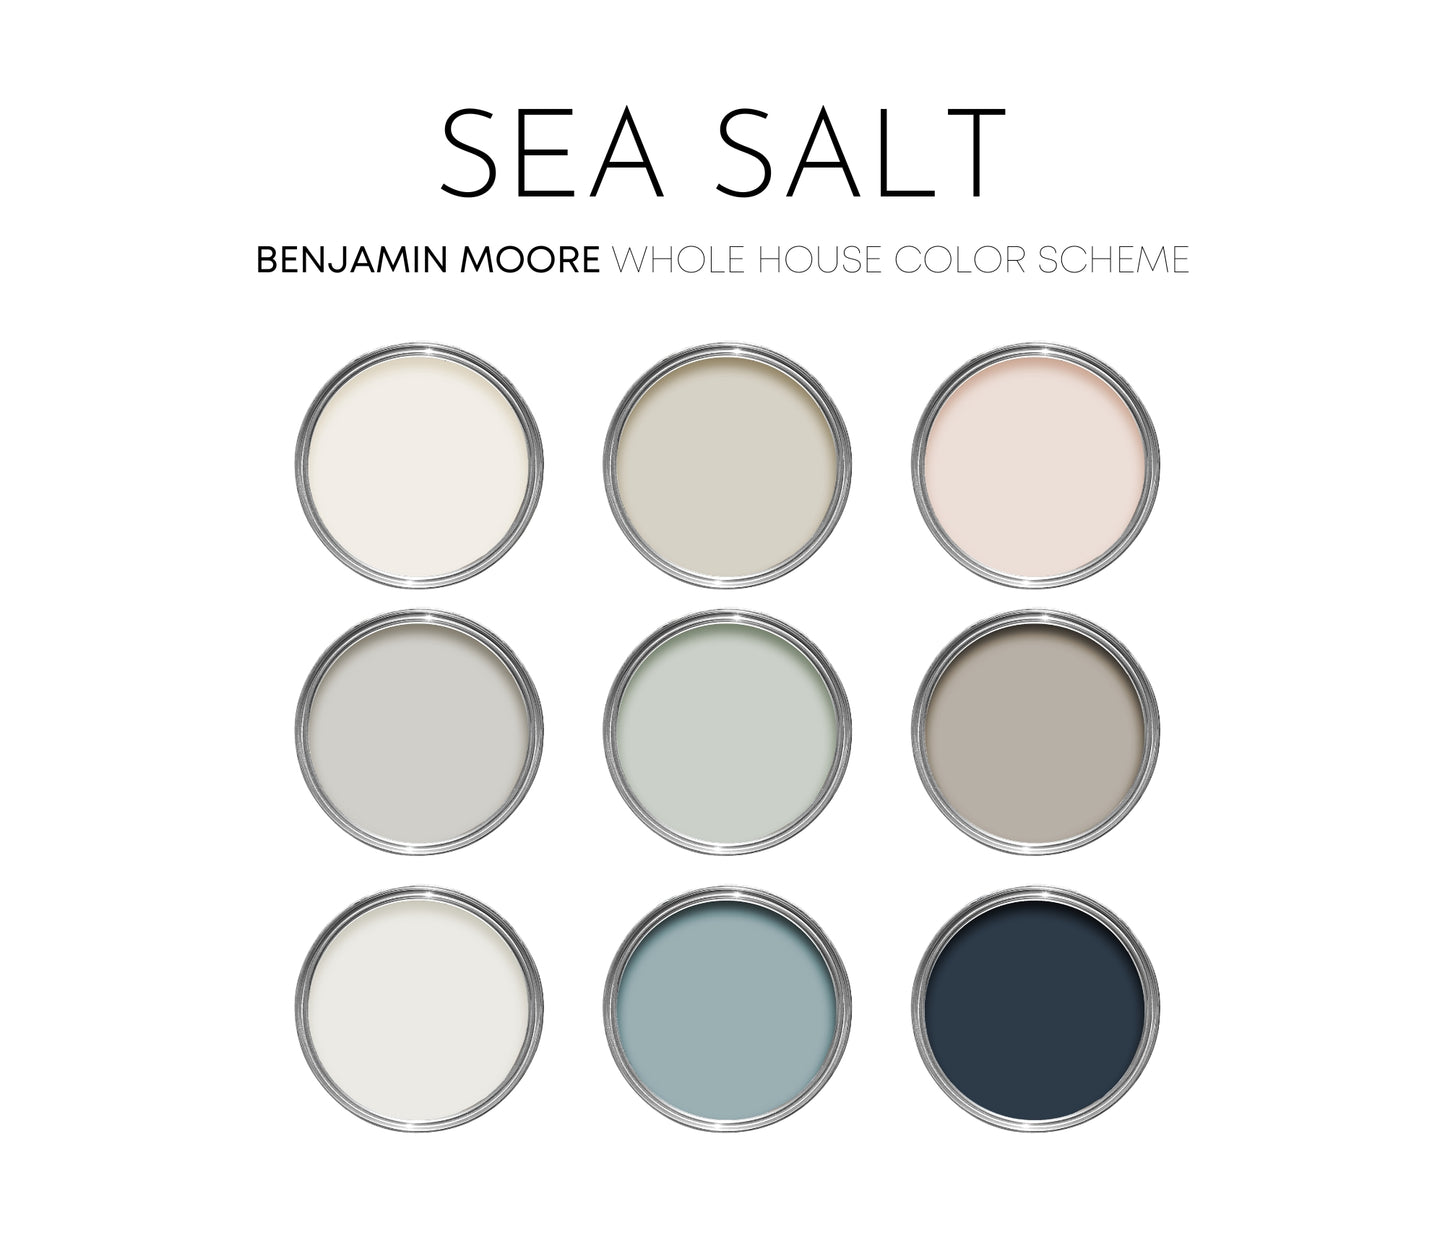 Sea Salt Benjamin Moore Paint Palette, Modern Coastal Interior Paint Colors for Home, Coastal Interior Design Color Palette, Simply White